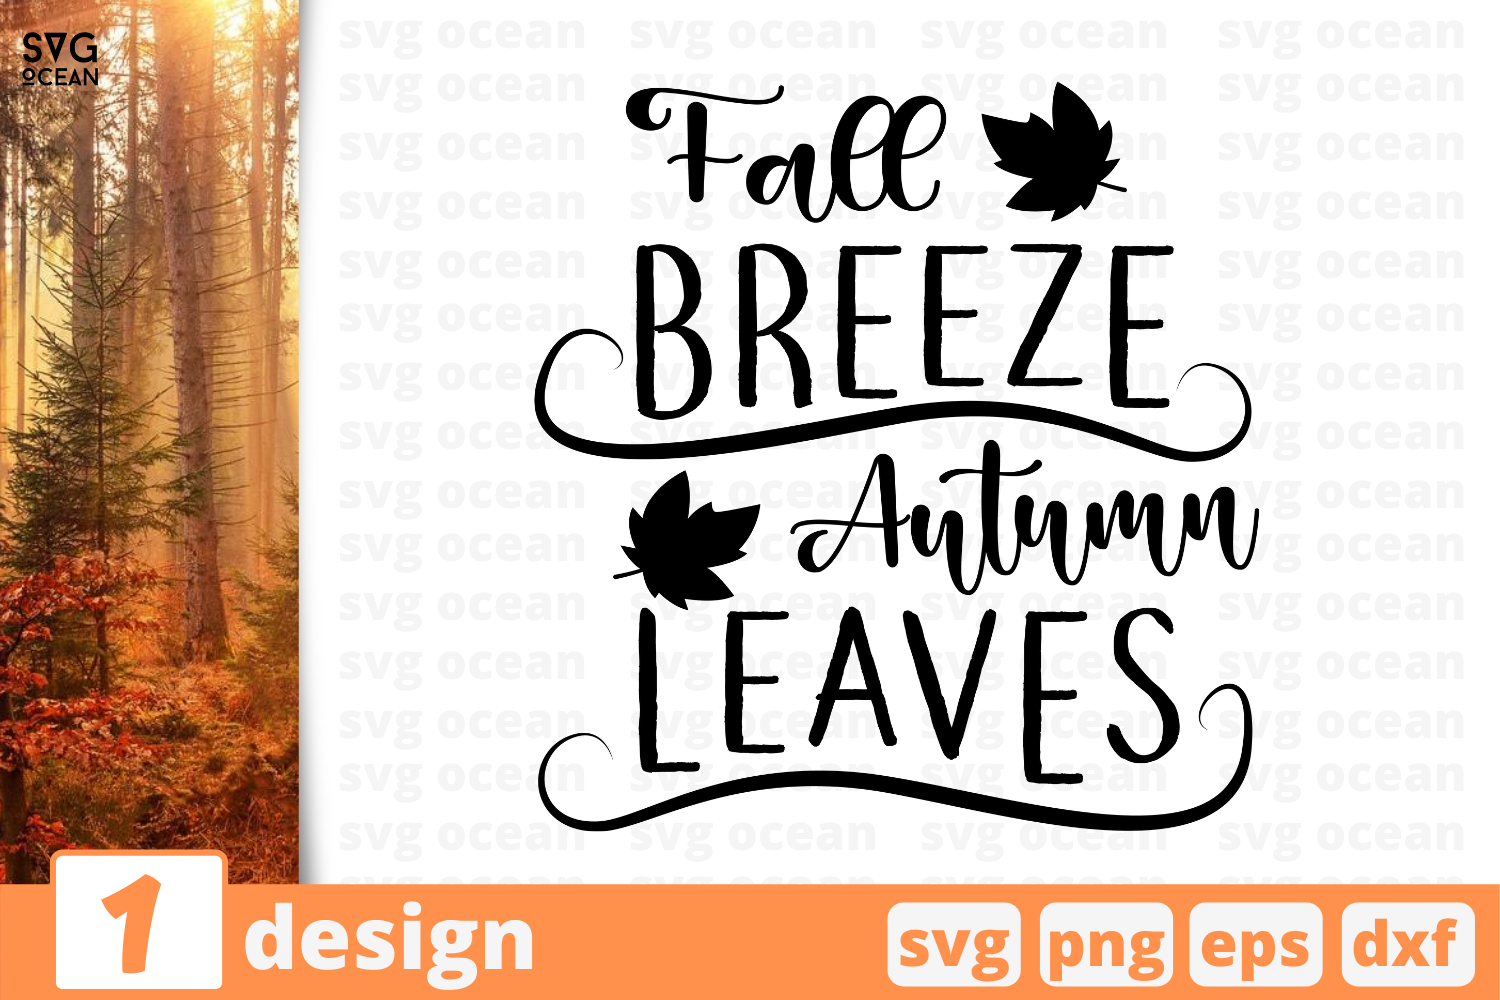 1 Fall Breeze Autumn Leaves Autumn Quotes Cricut Svg By Svgocean Thehungryjpeg Com